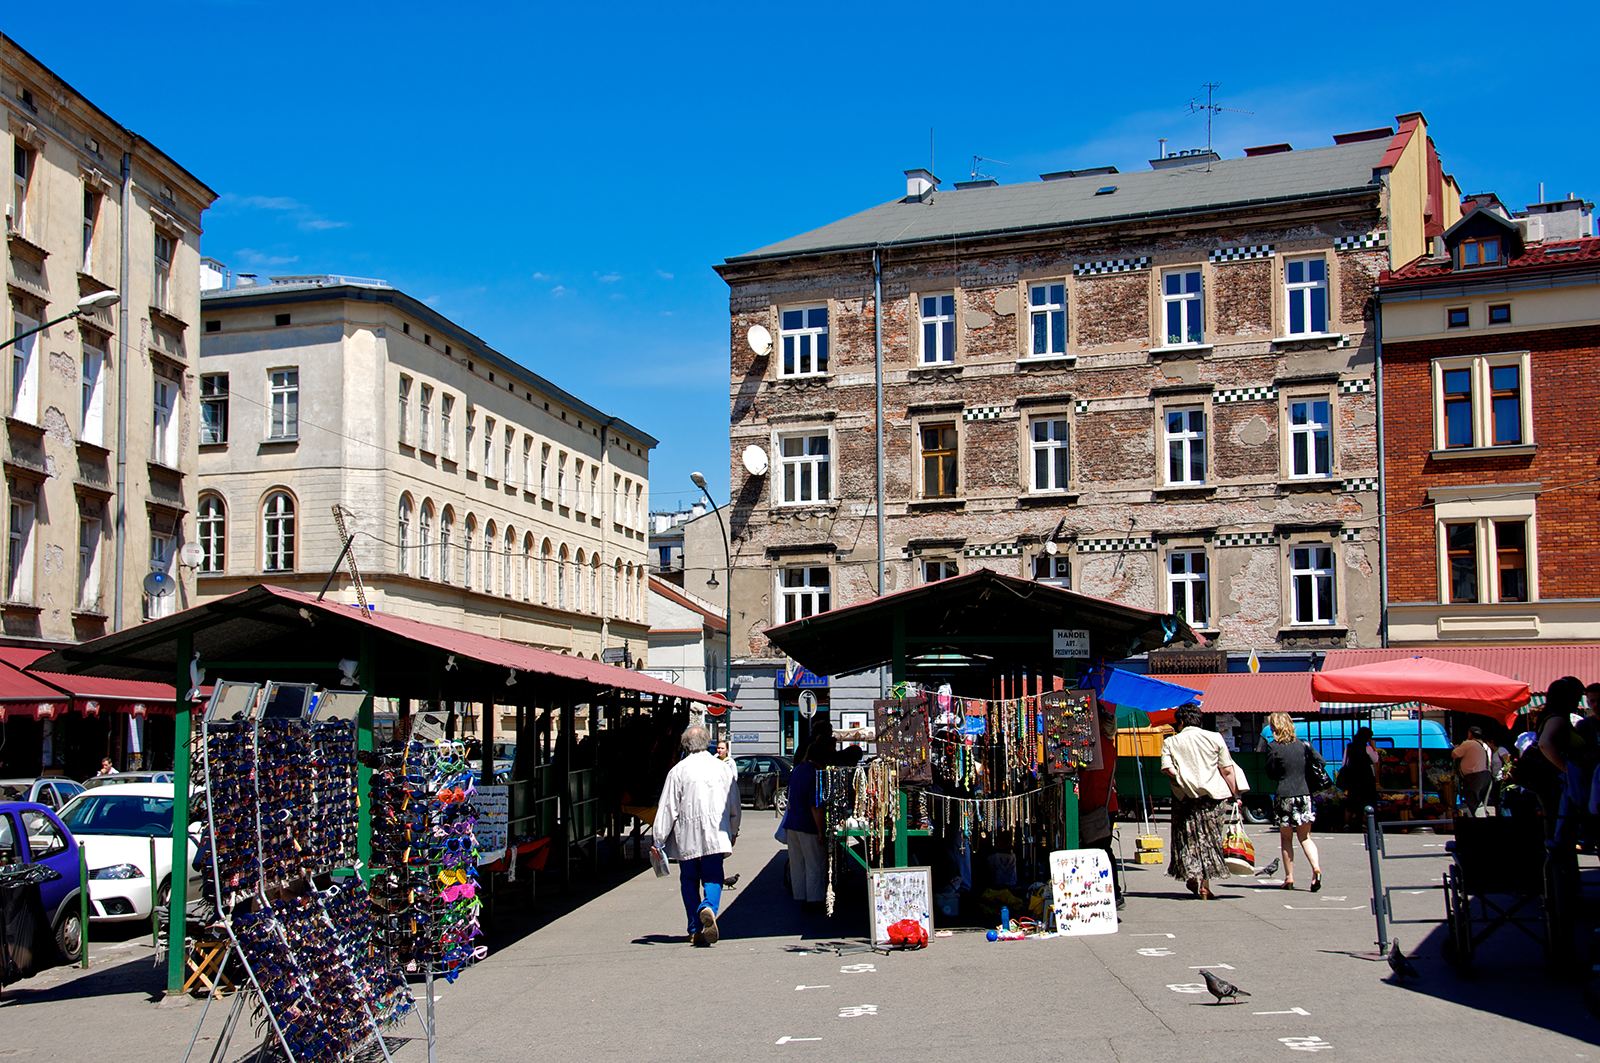 Kazimierz, the Old Jewish Quarter, in Krakow, Poland, in 2009. Photo courtesy of Wikipedia/Creative Commons